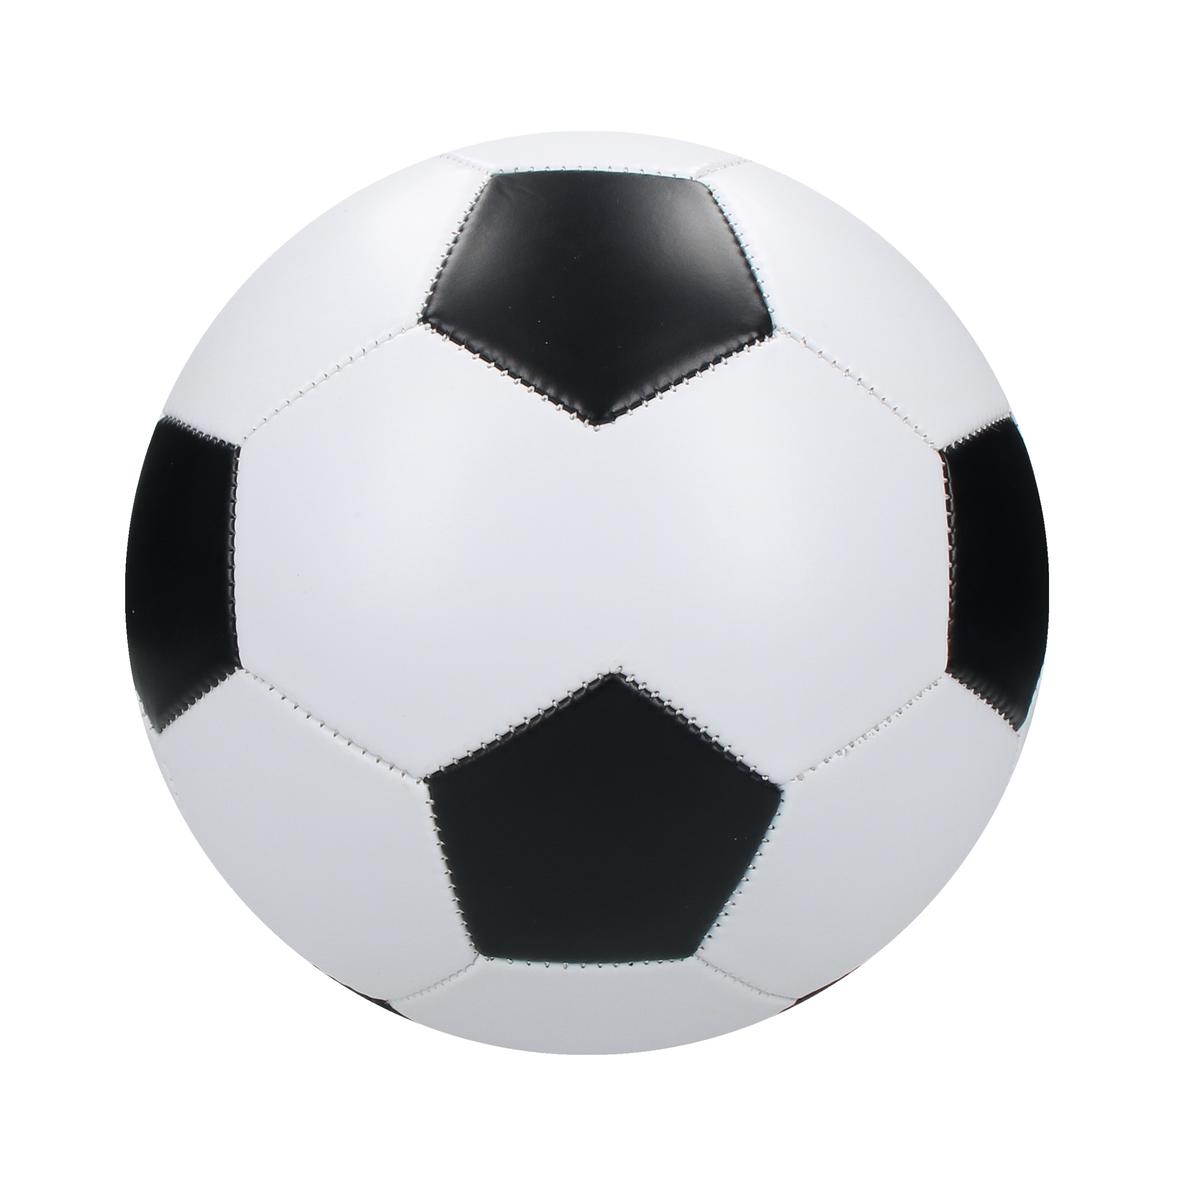 Retro Design Size 5 Football - Middlesbrough